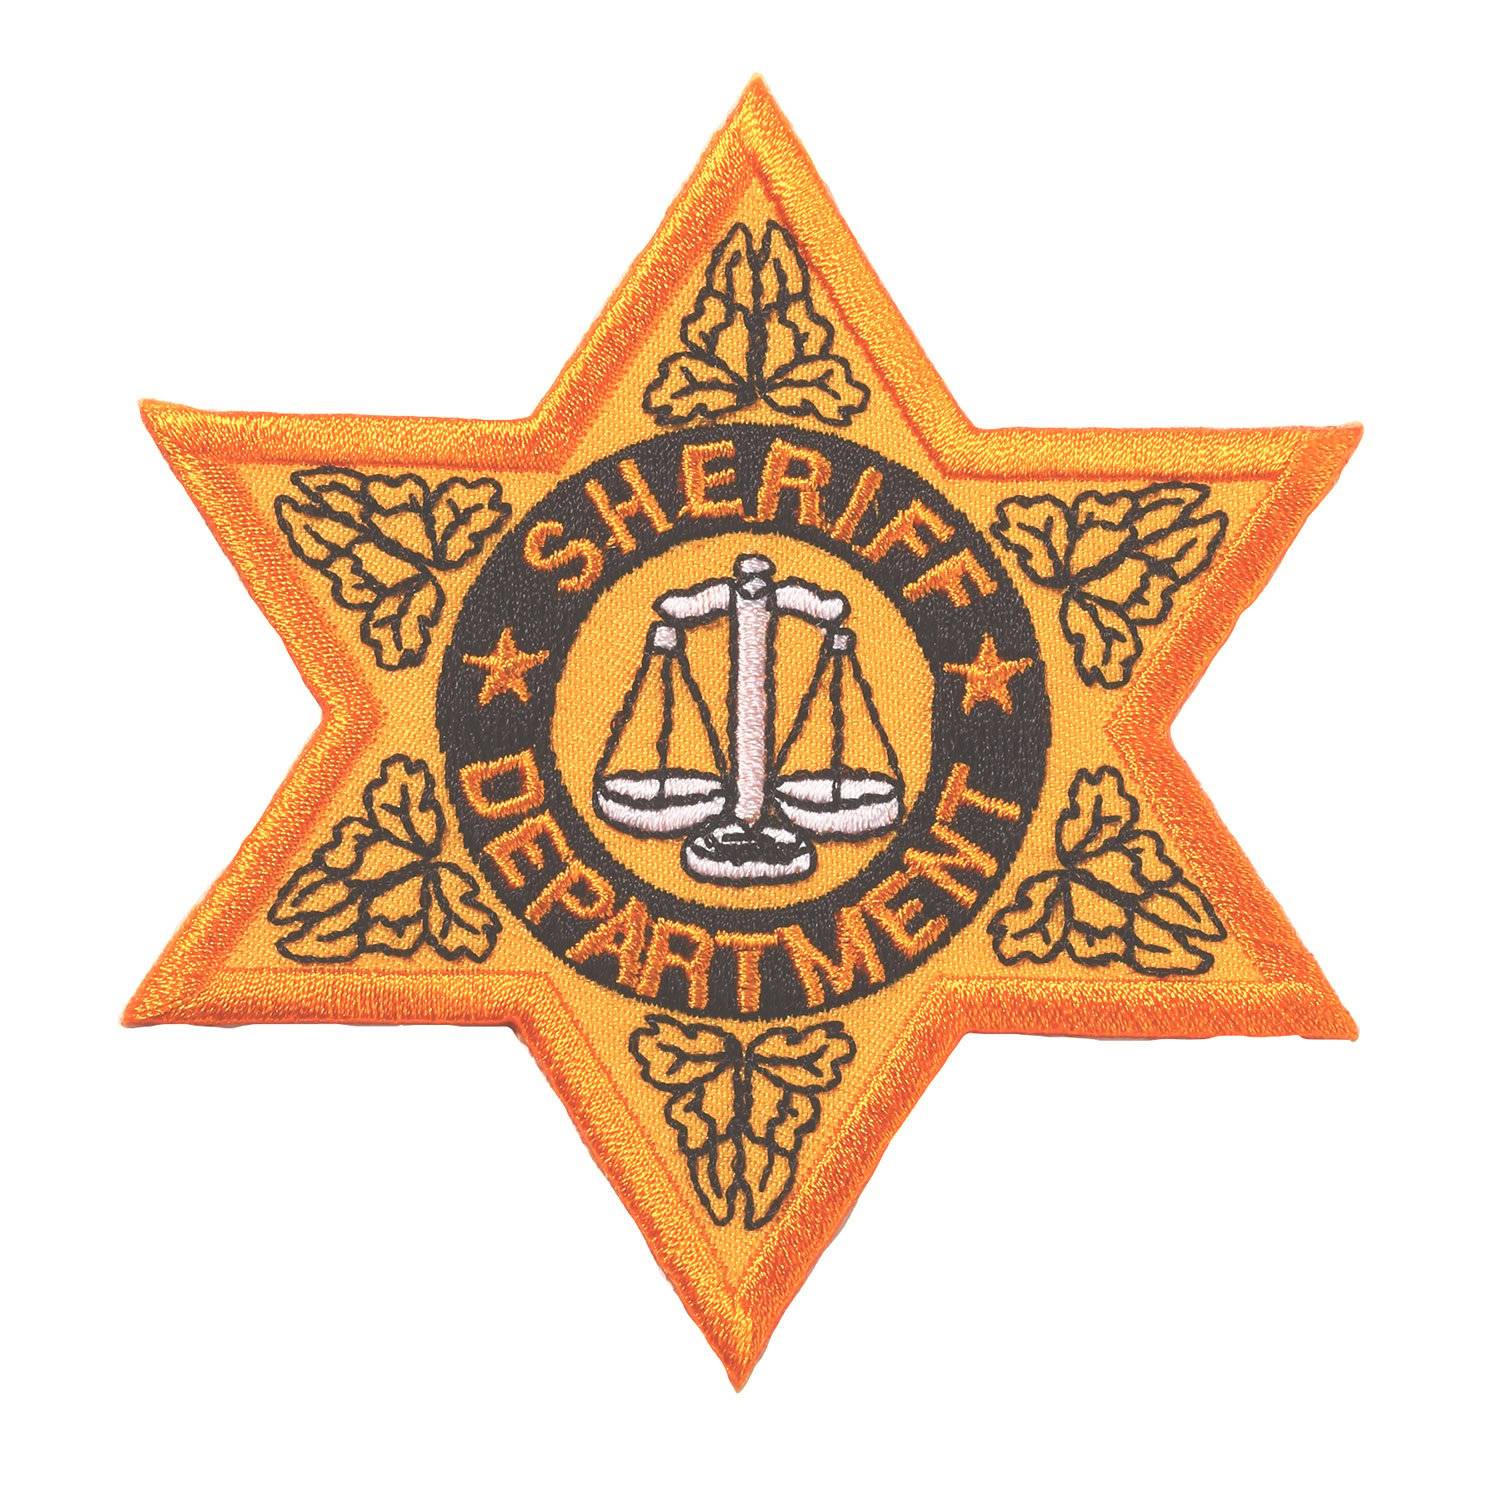 PENN EMBLEM SHERIFF DEPARTMENT REFLECTIVE BADGE EMBLEM